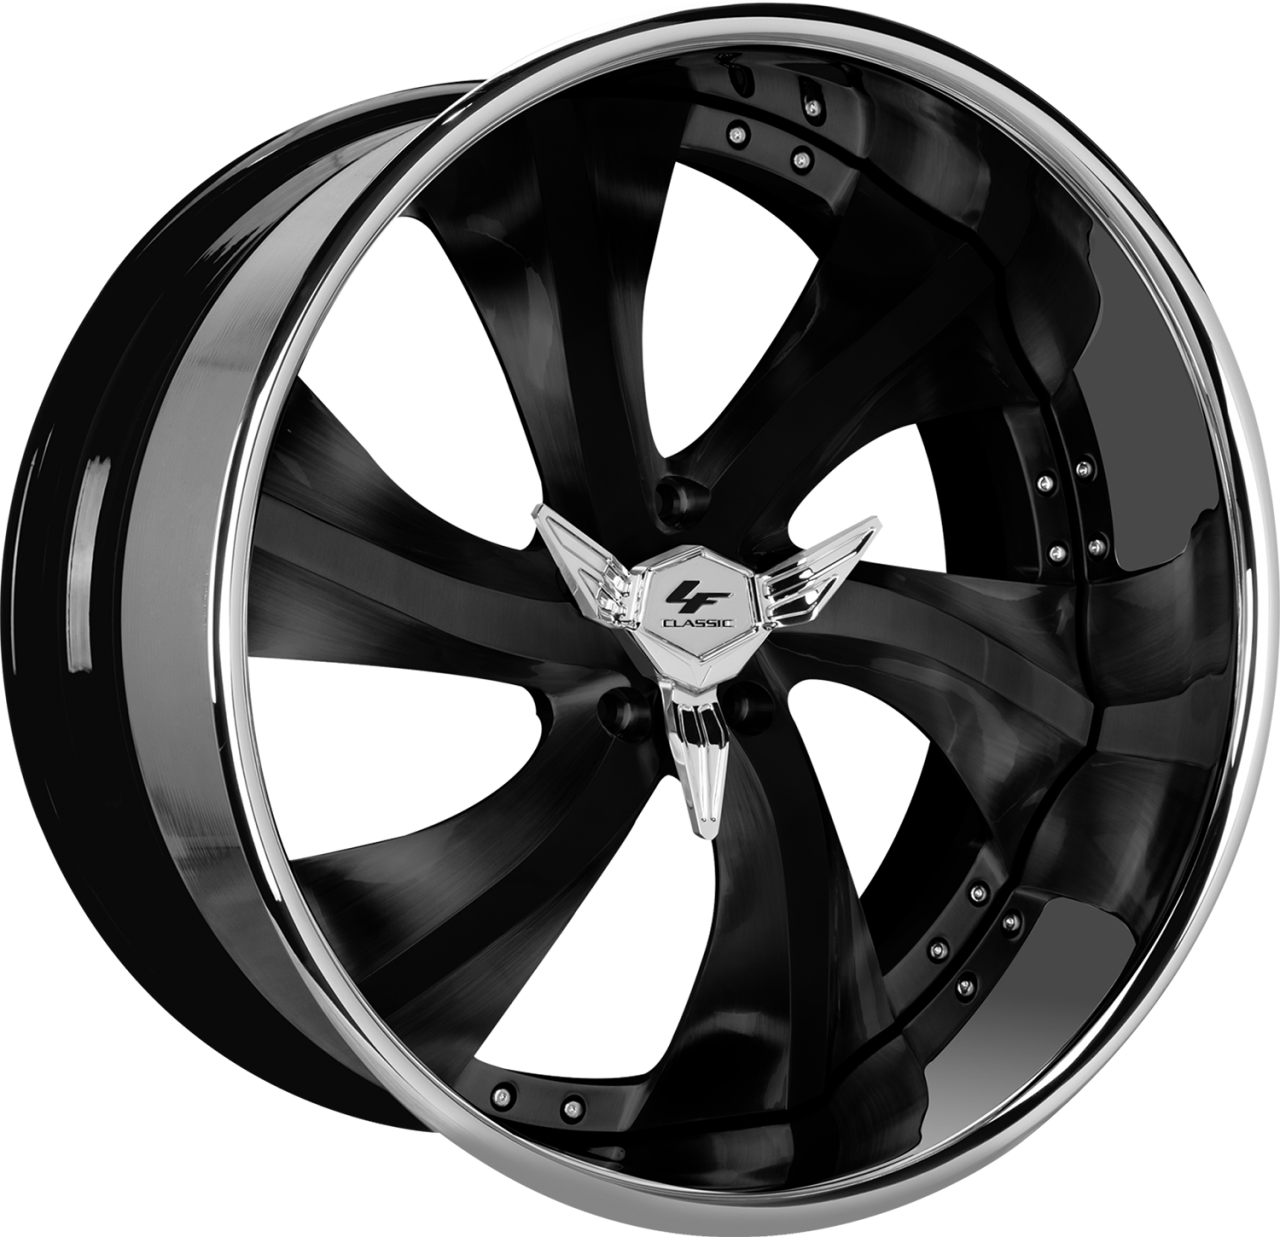 Artis Forged Boss wheel with Custom Satin Black finish